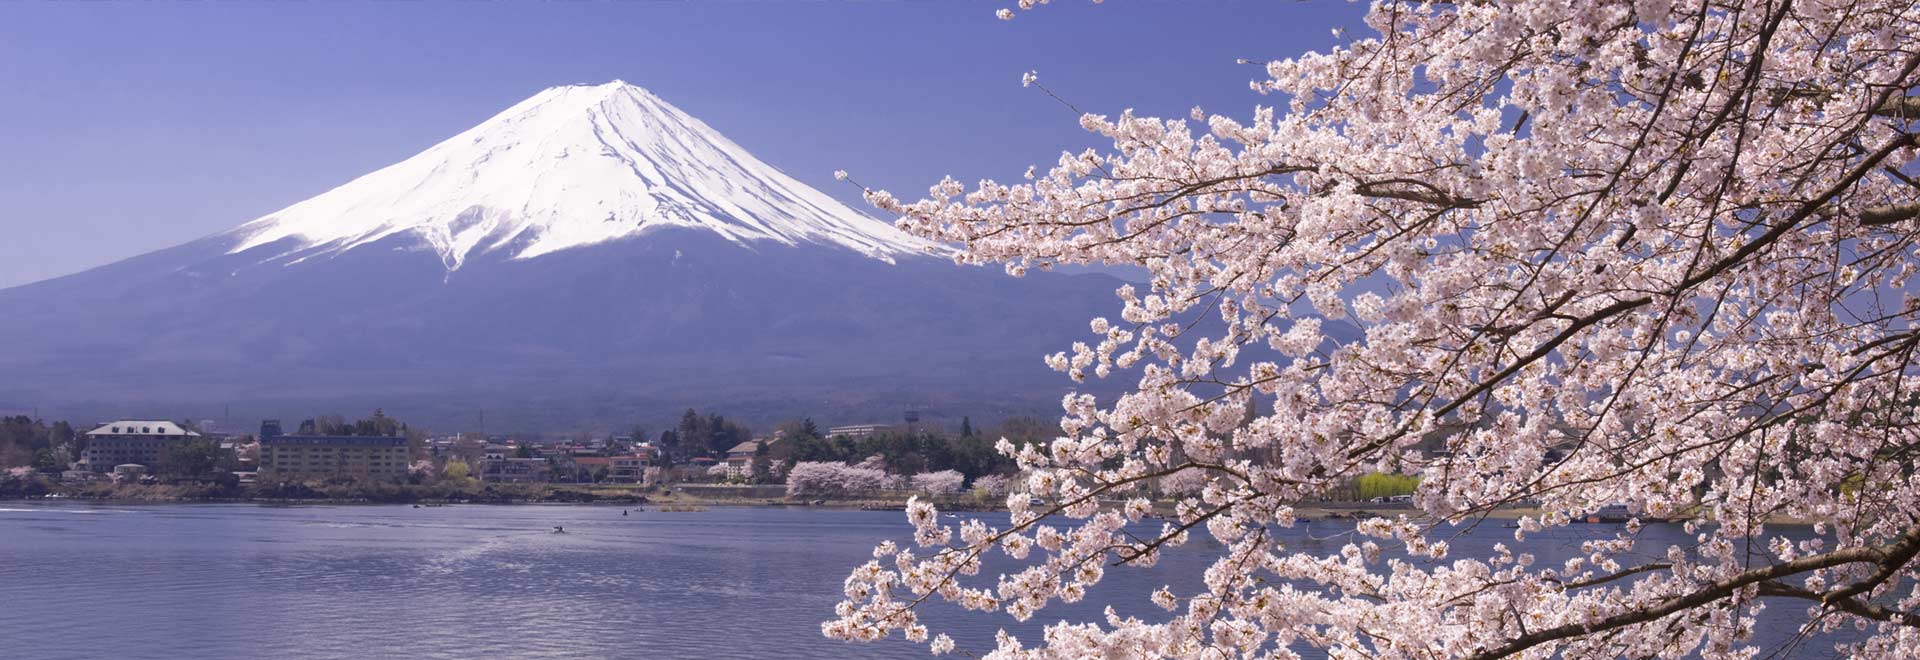 Asia Classic Japan Mt Fuji Cherry Blossom MH